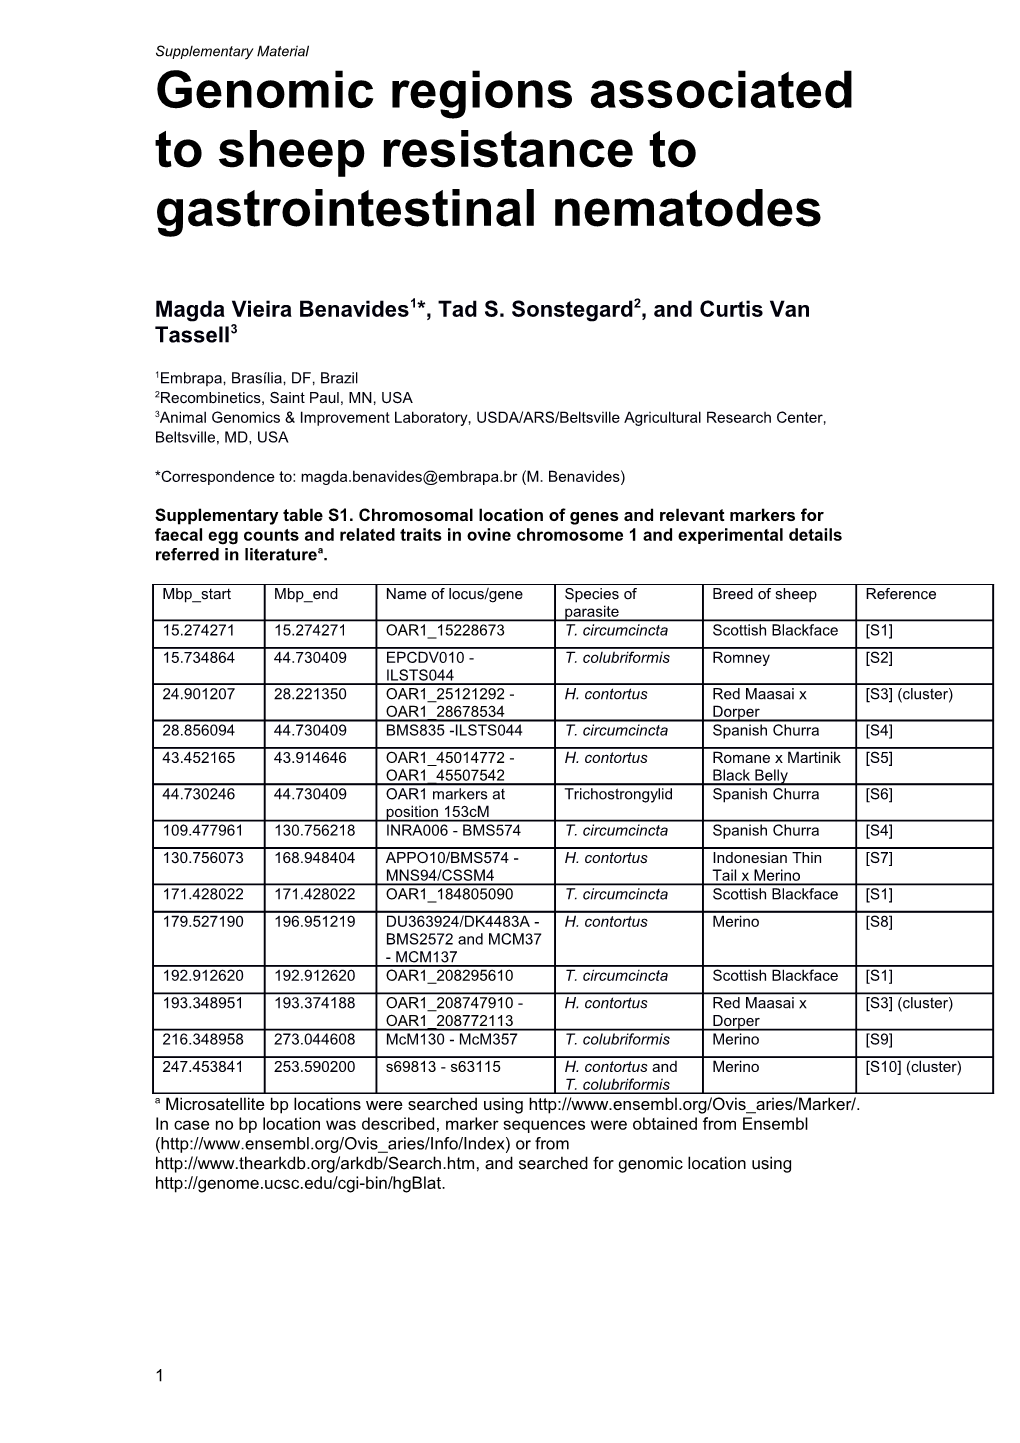 Genomic Regions Associated to Sheep Resistance to Gastrointestinal Nematodes